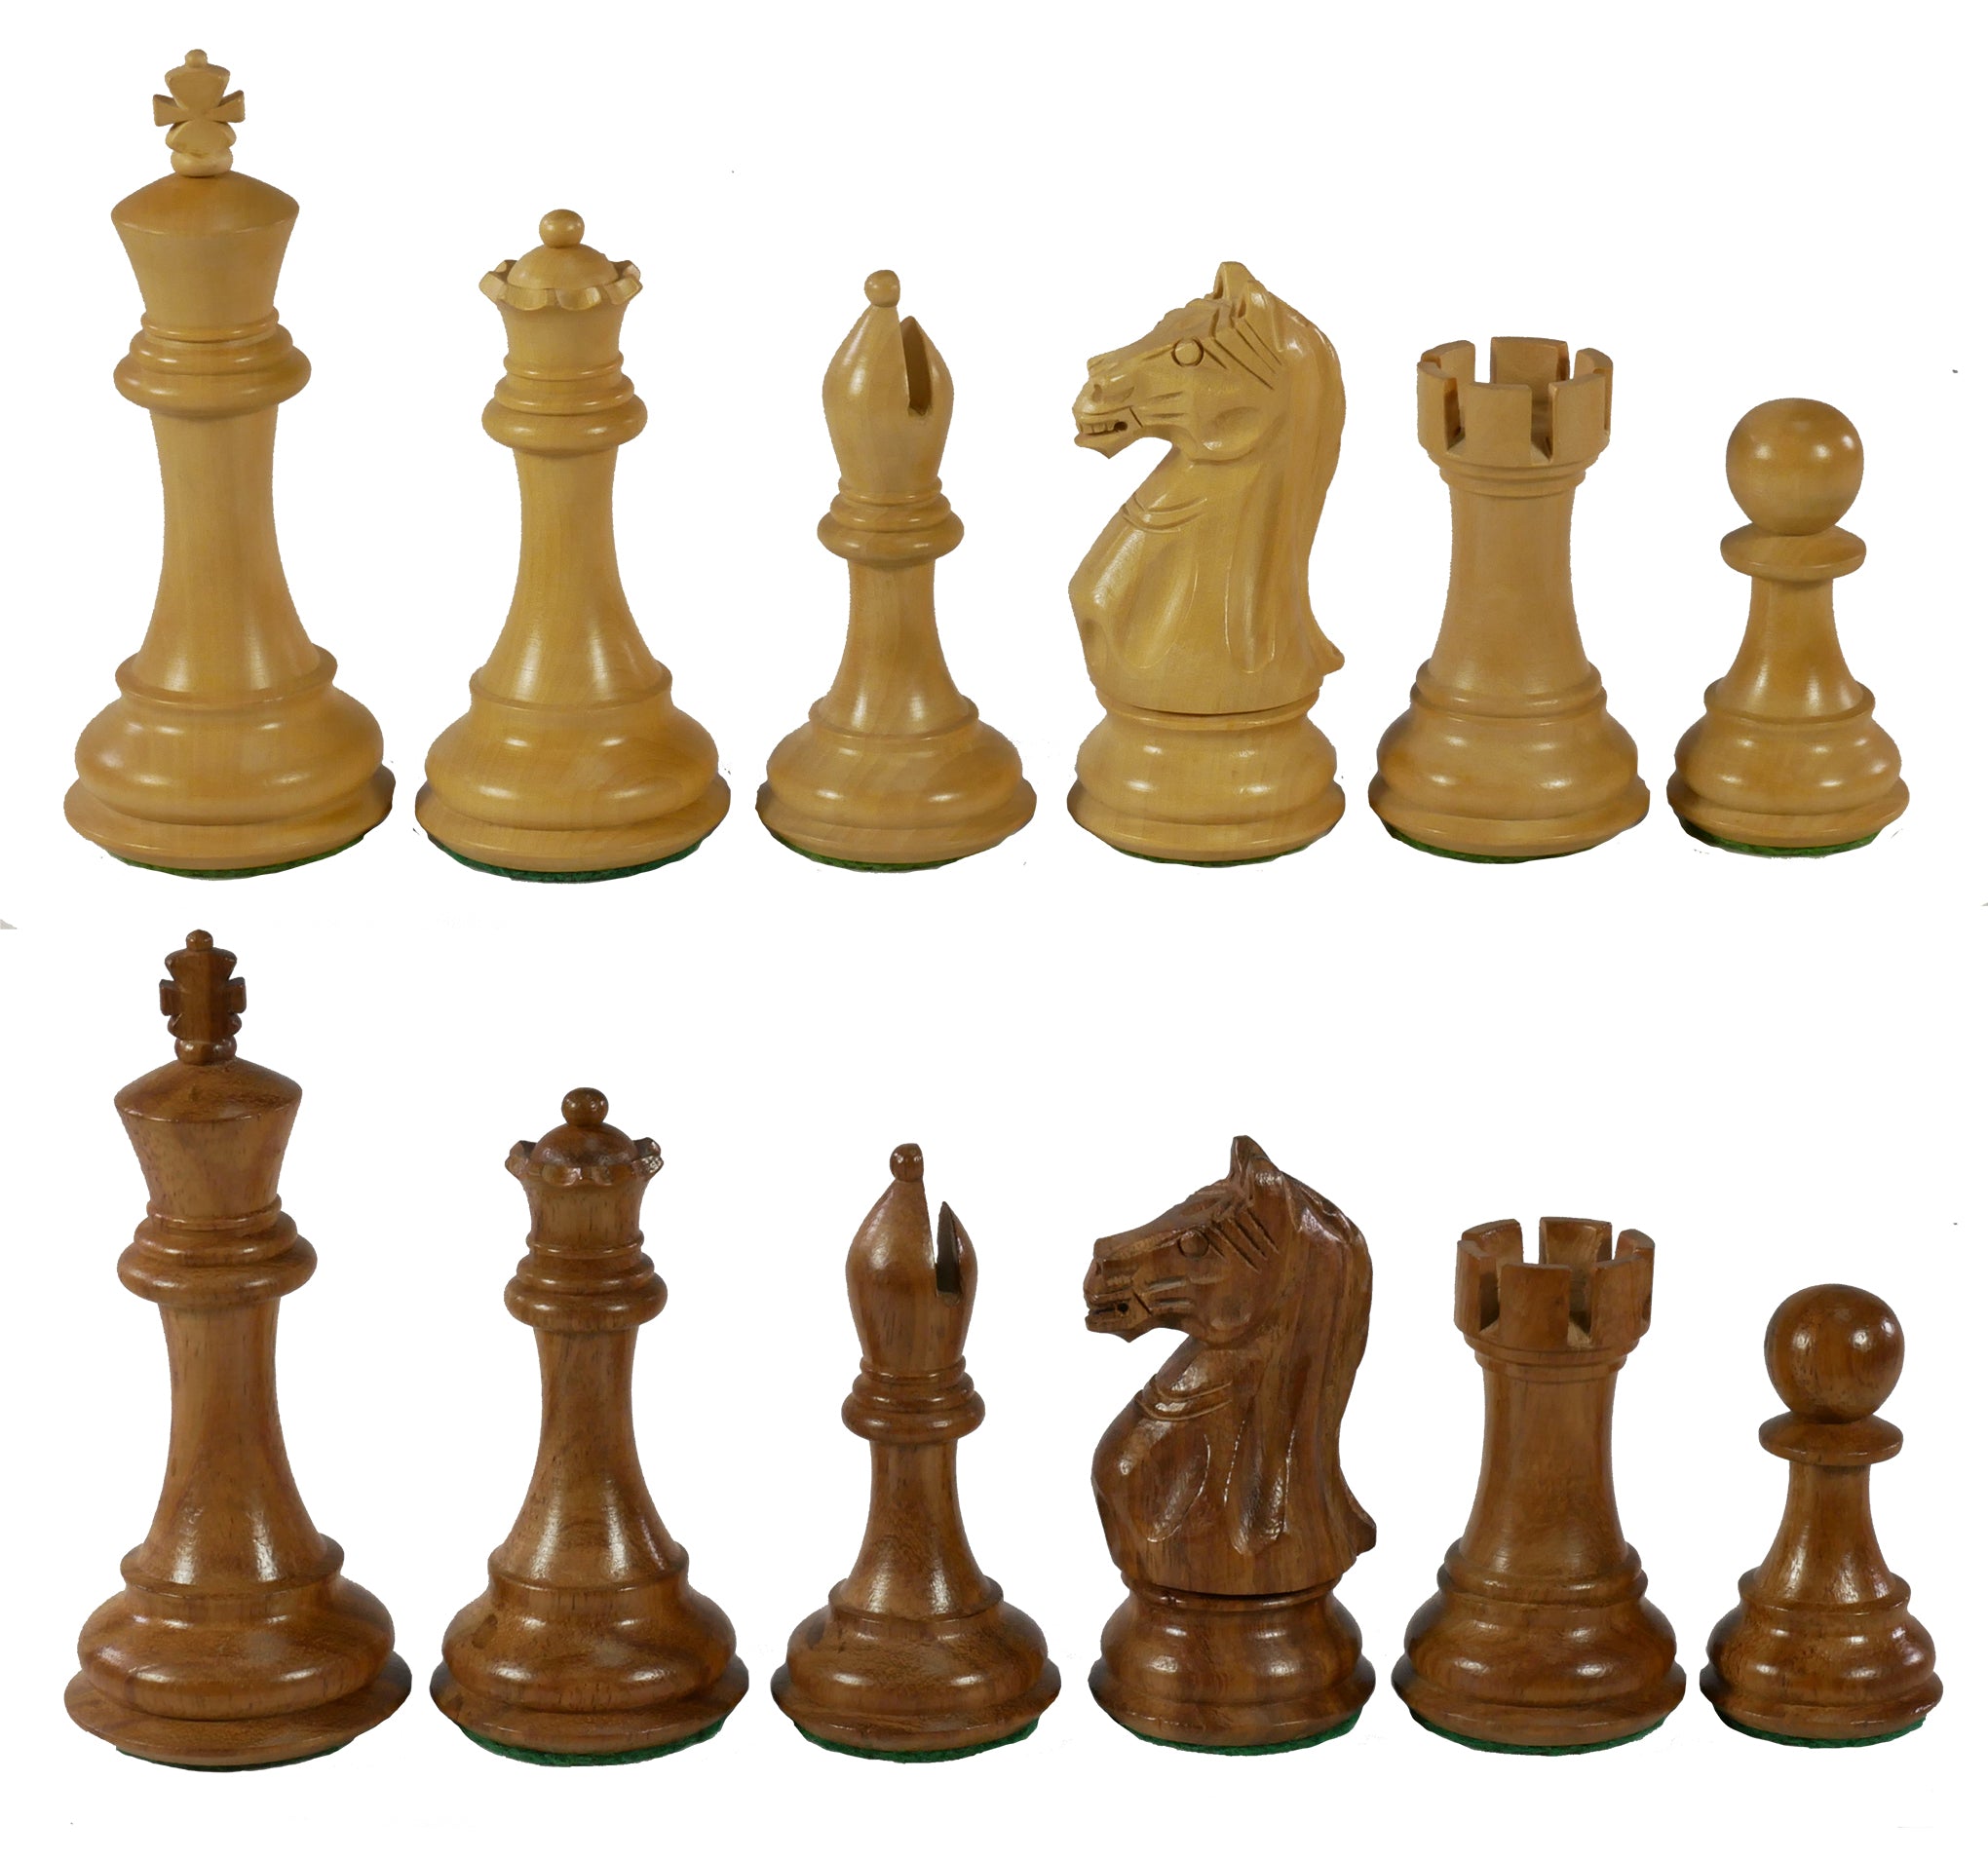 Chess Pieces - 4" Supreme Sheesham/Boxwood Chessmen (Double Queens)